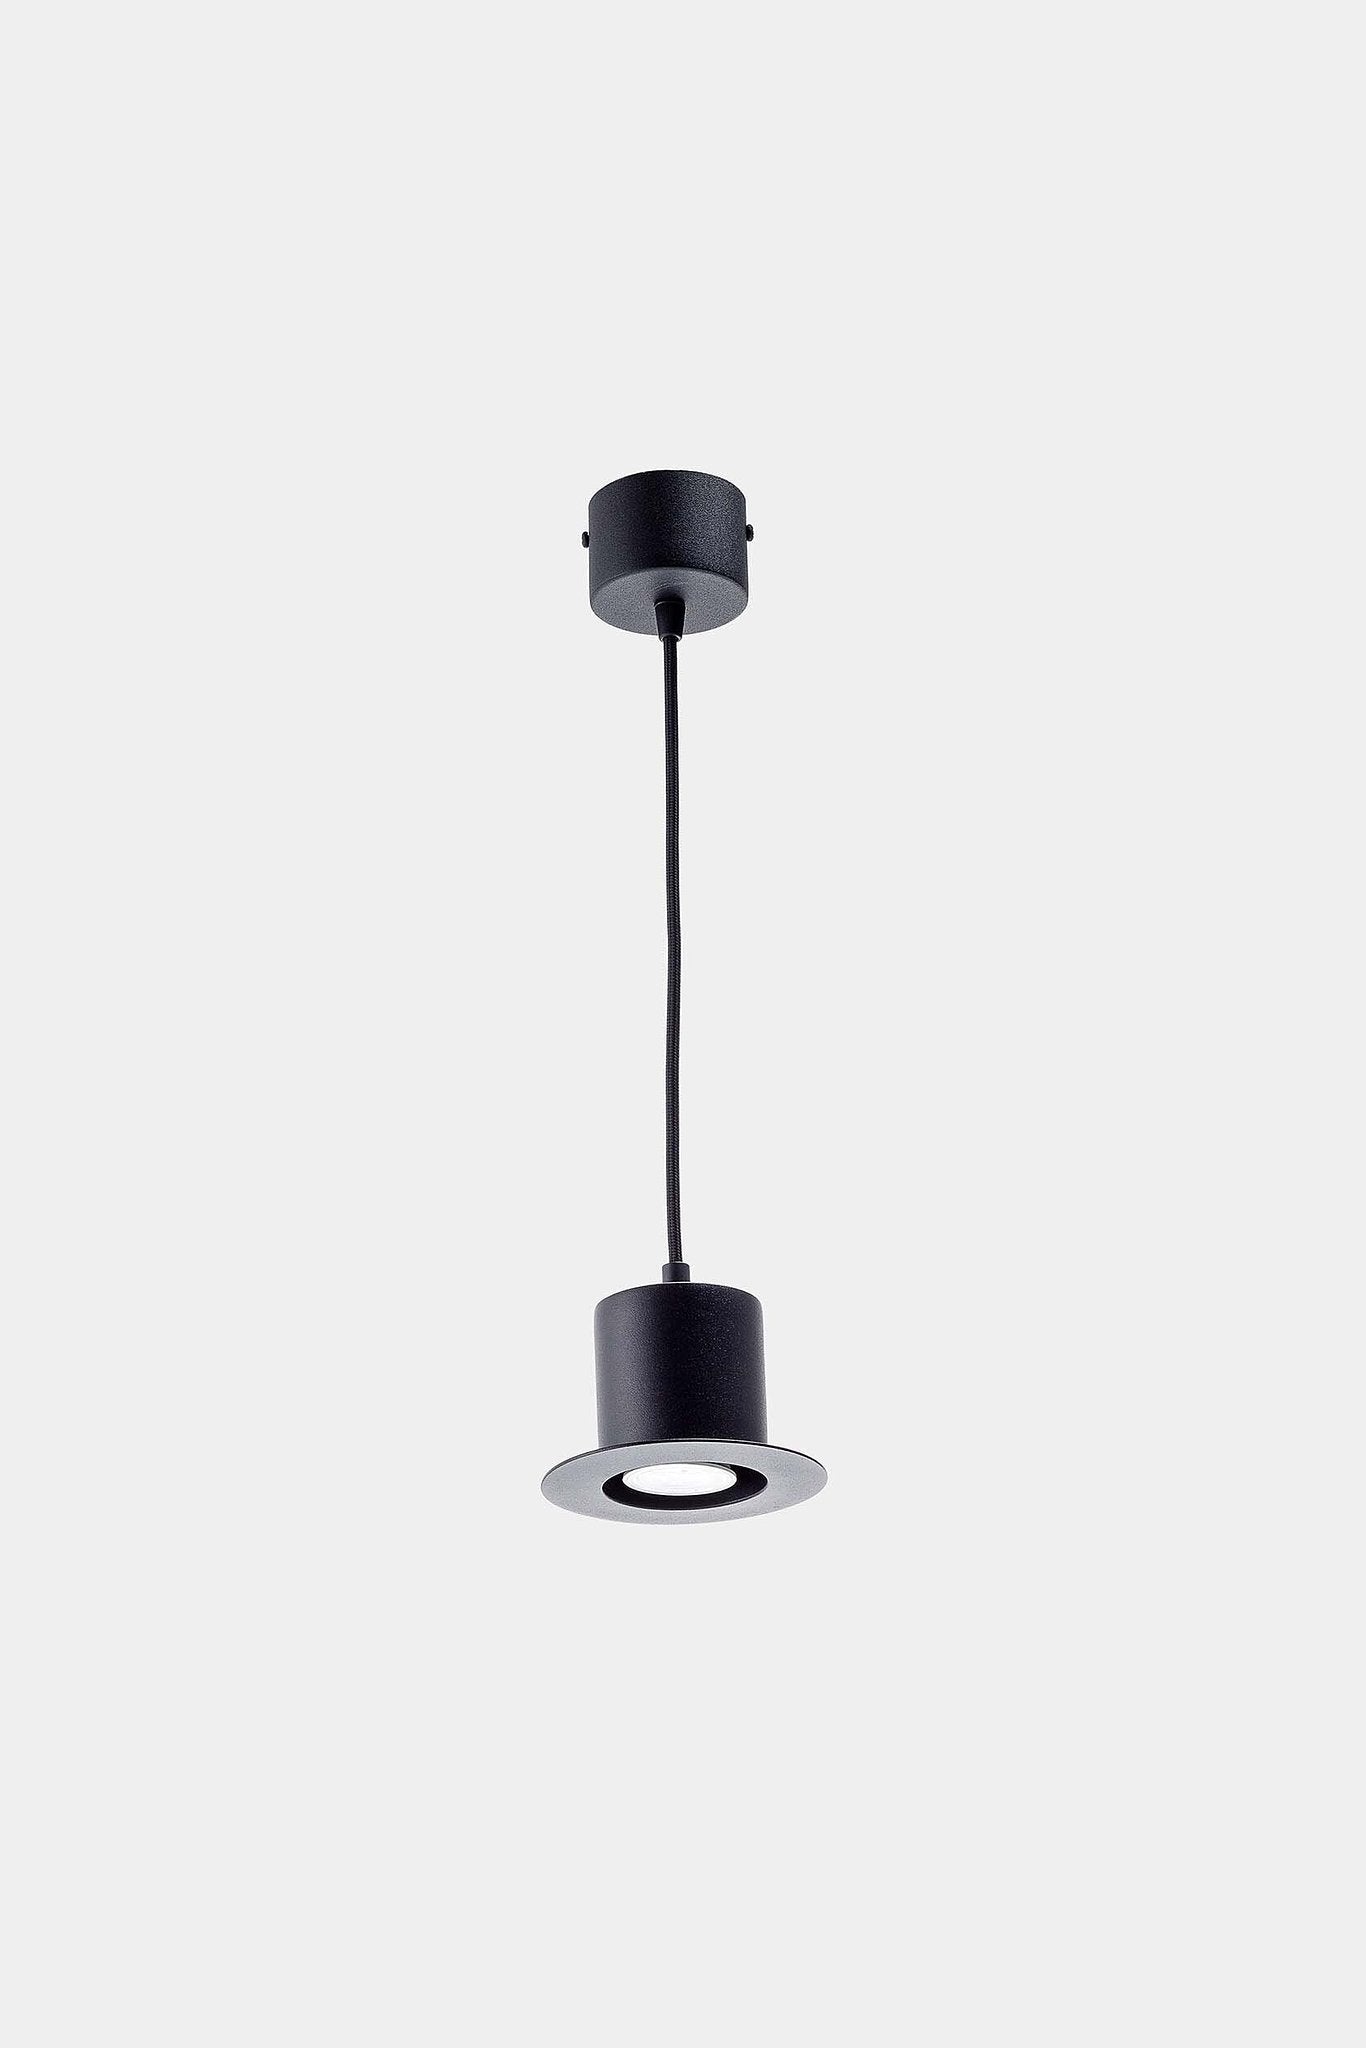 EMKO HAT Pendant Lamp 1x Conical